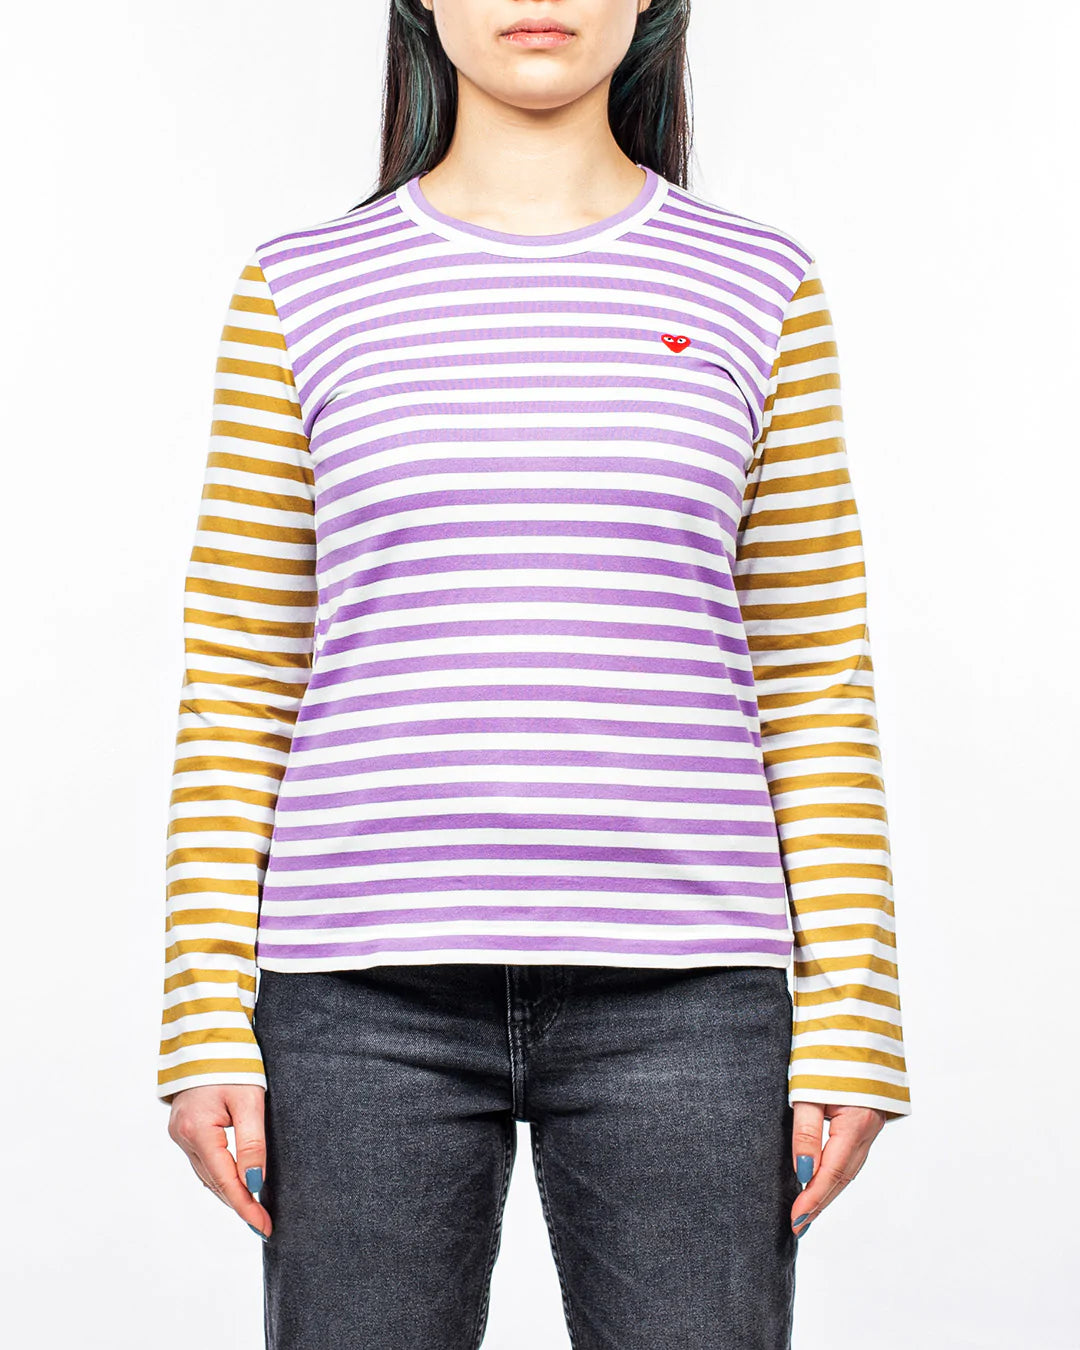 Striped Long Block Sleeve T-Shirt in purple/olive